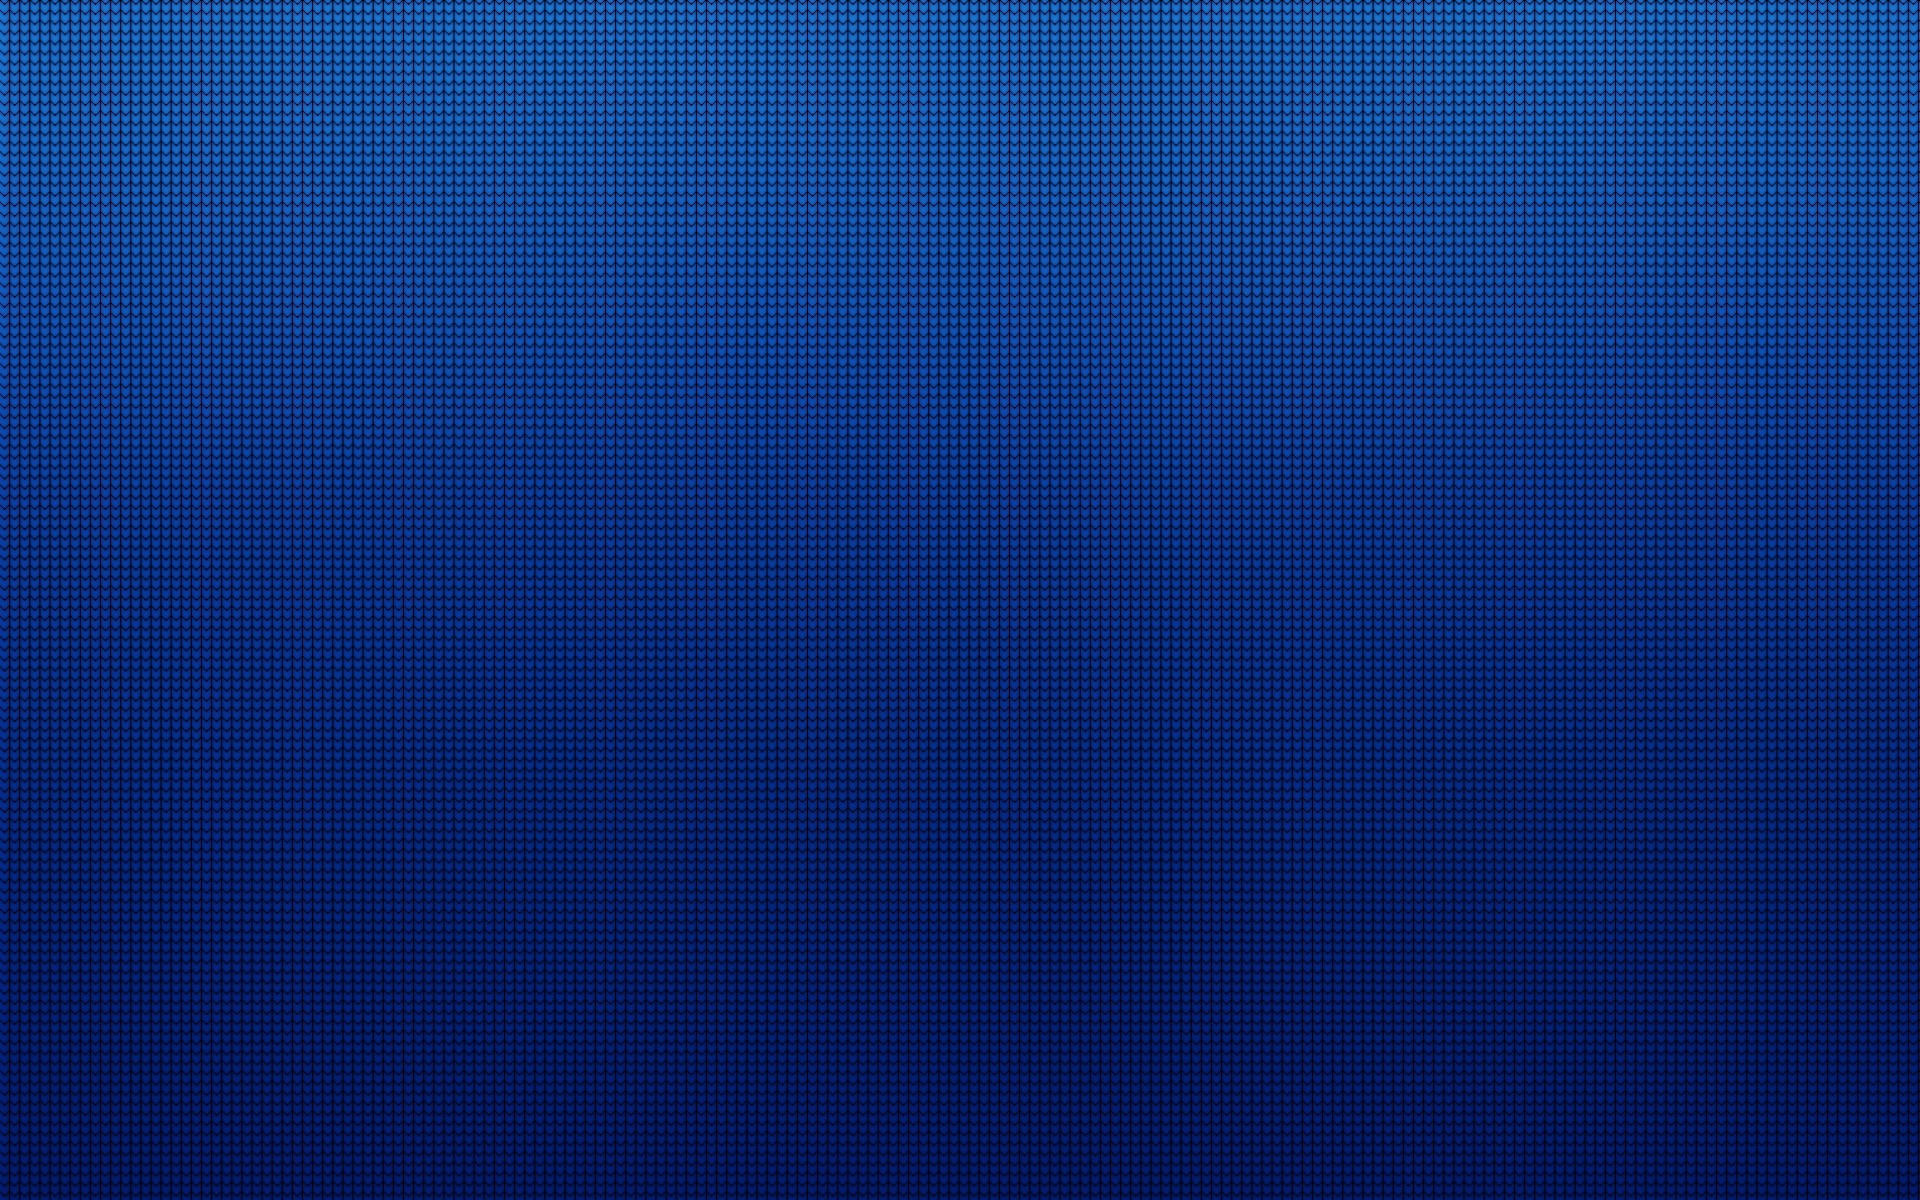 Navy Blue Backgrounds